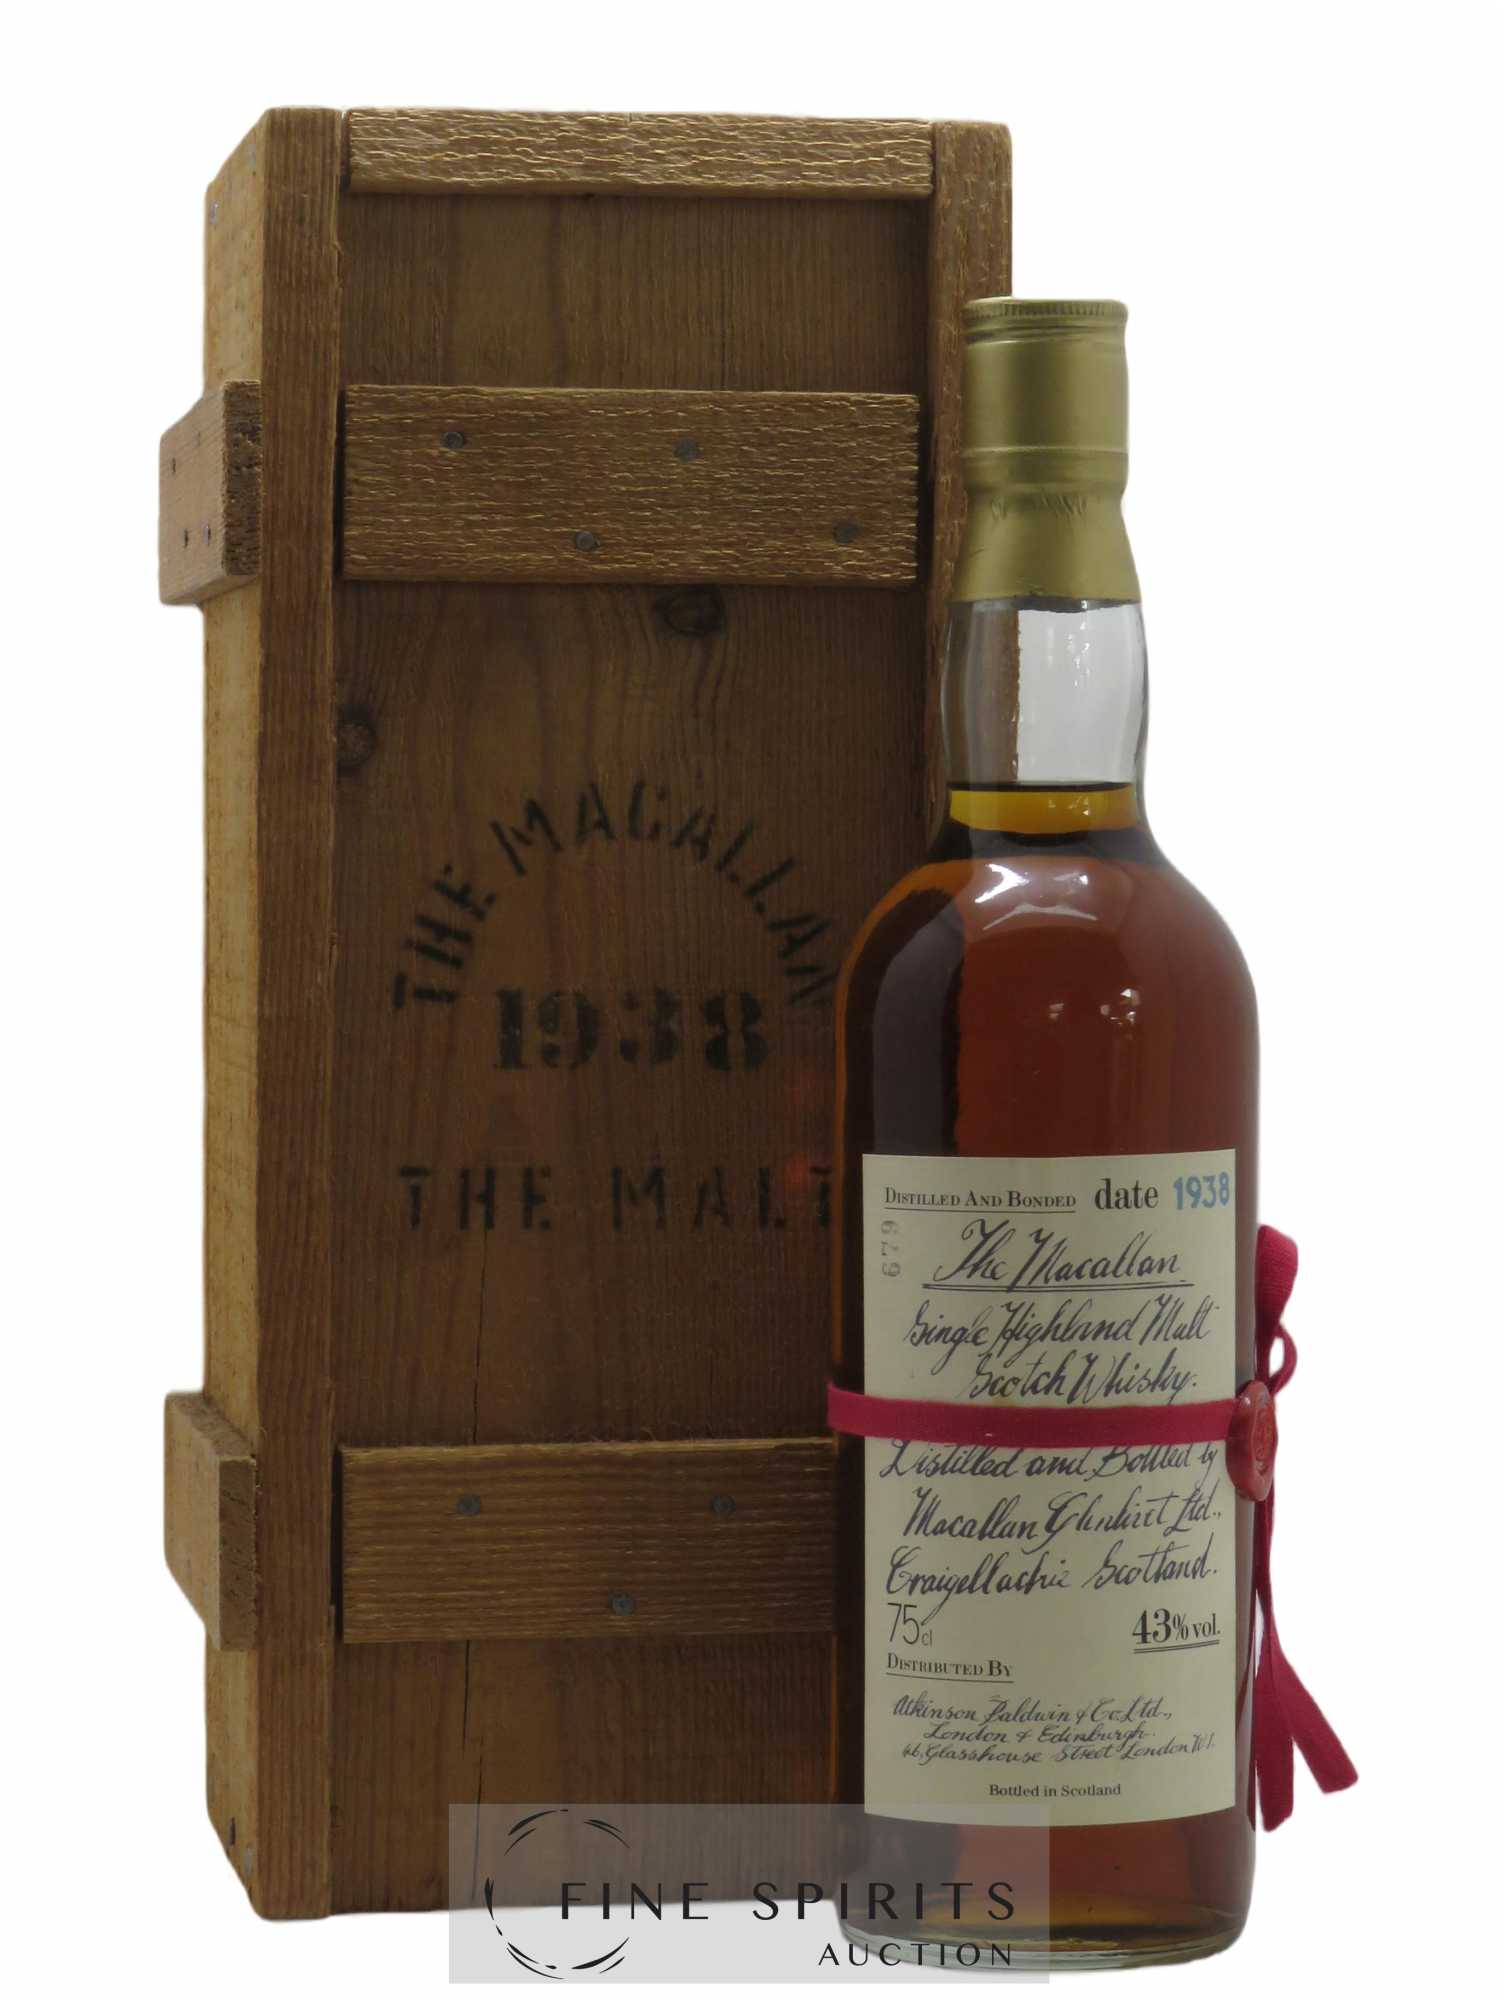 At Auction: 1 bouteille SCOTCH WHISKY Single Highland Malt